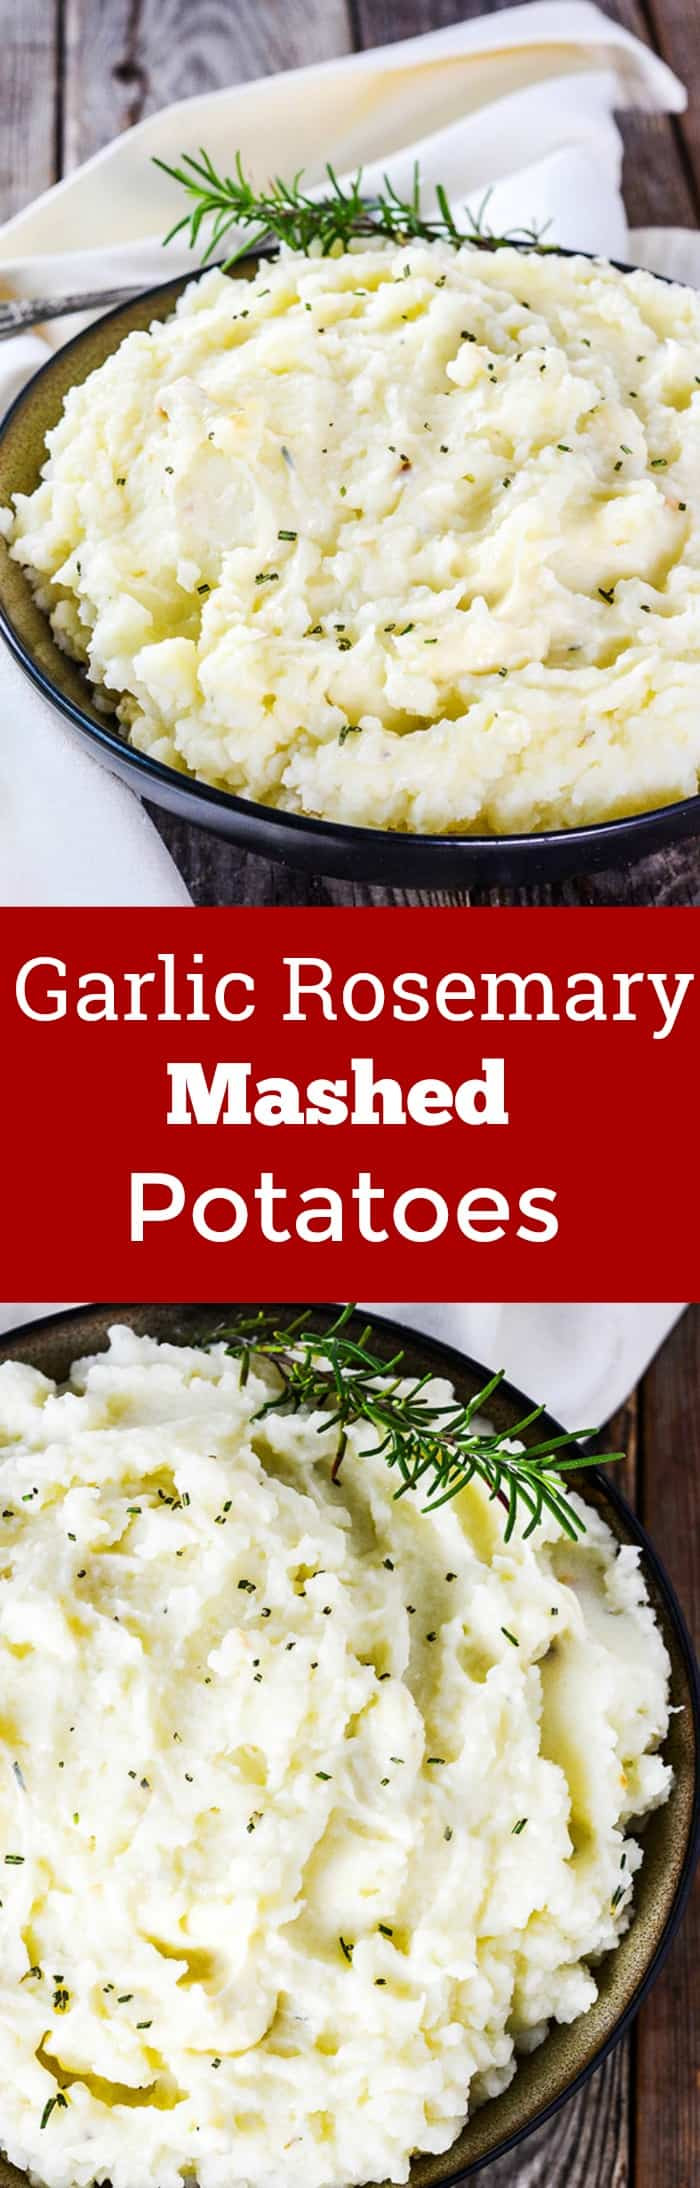 Rosemary Garlic Mashed Potatoes
 Vegan Garlic Rosemary Mashed Potatoes